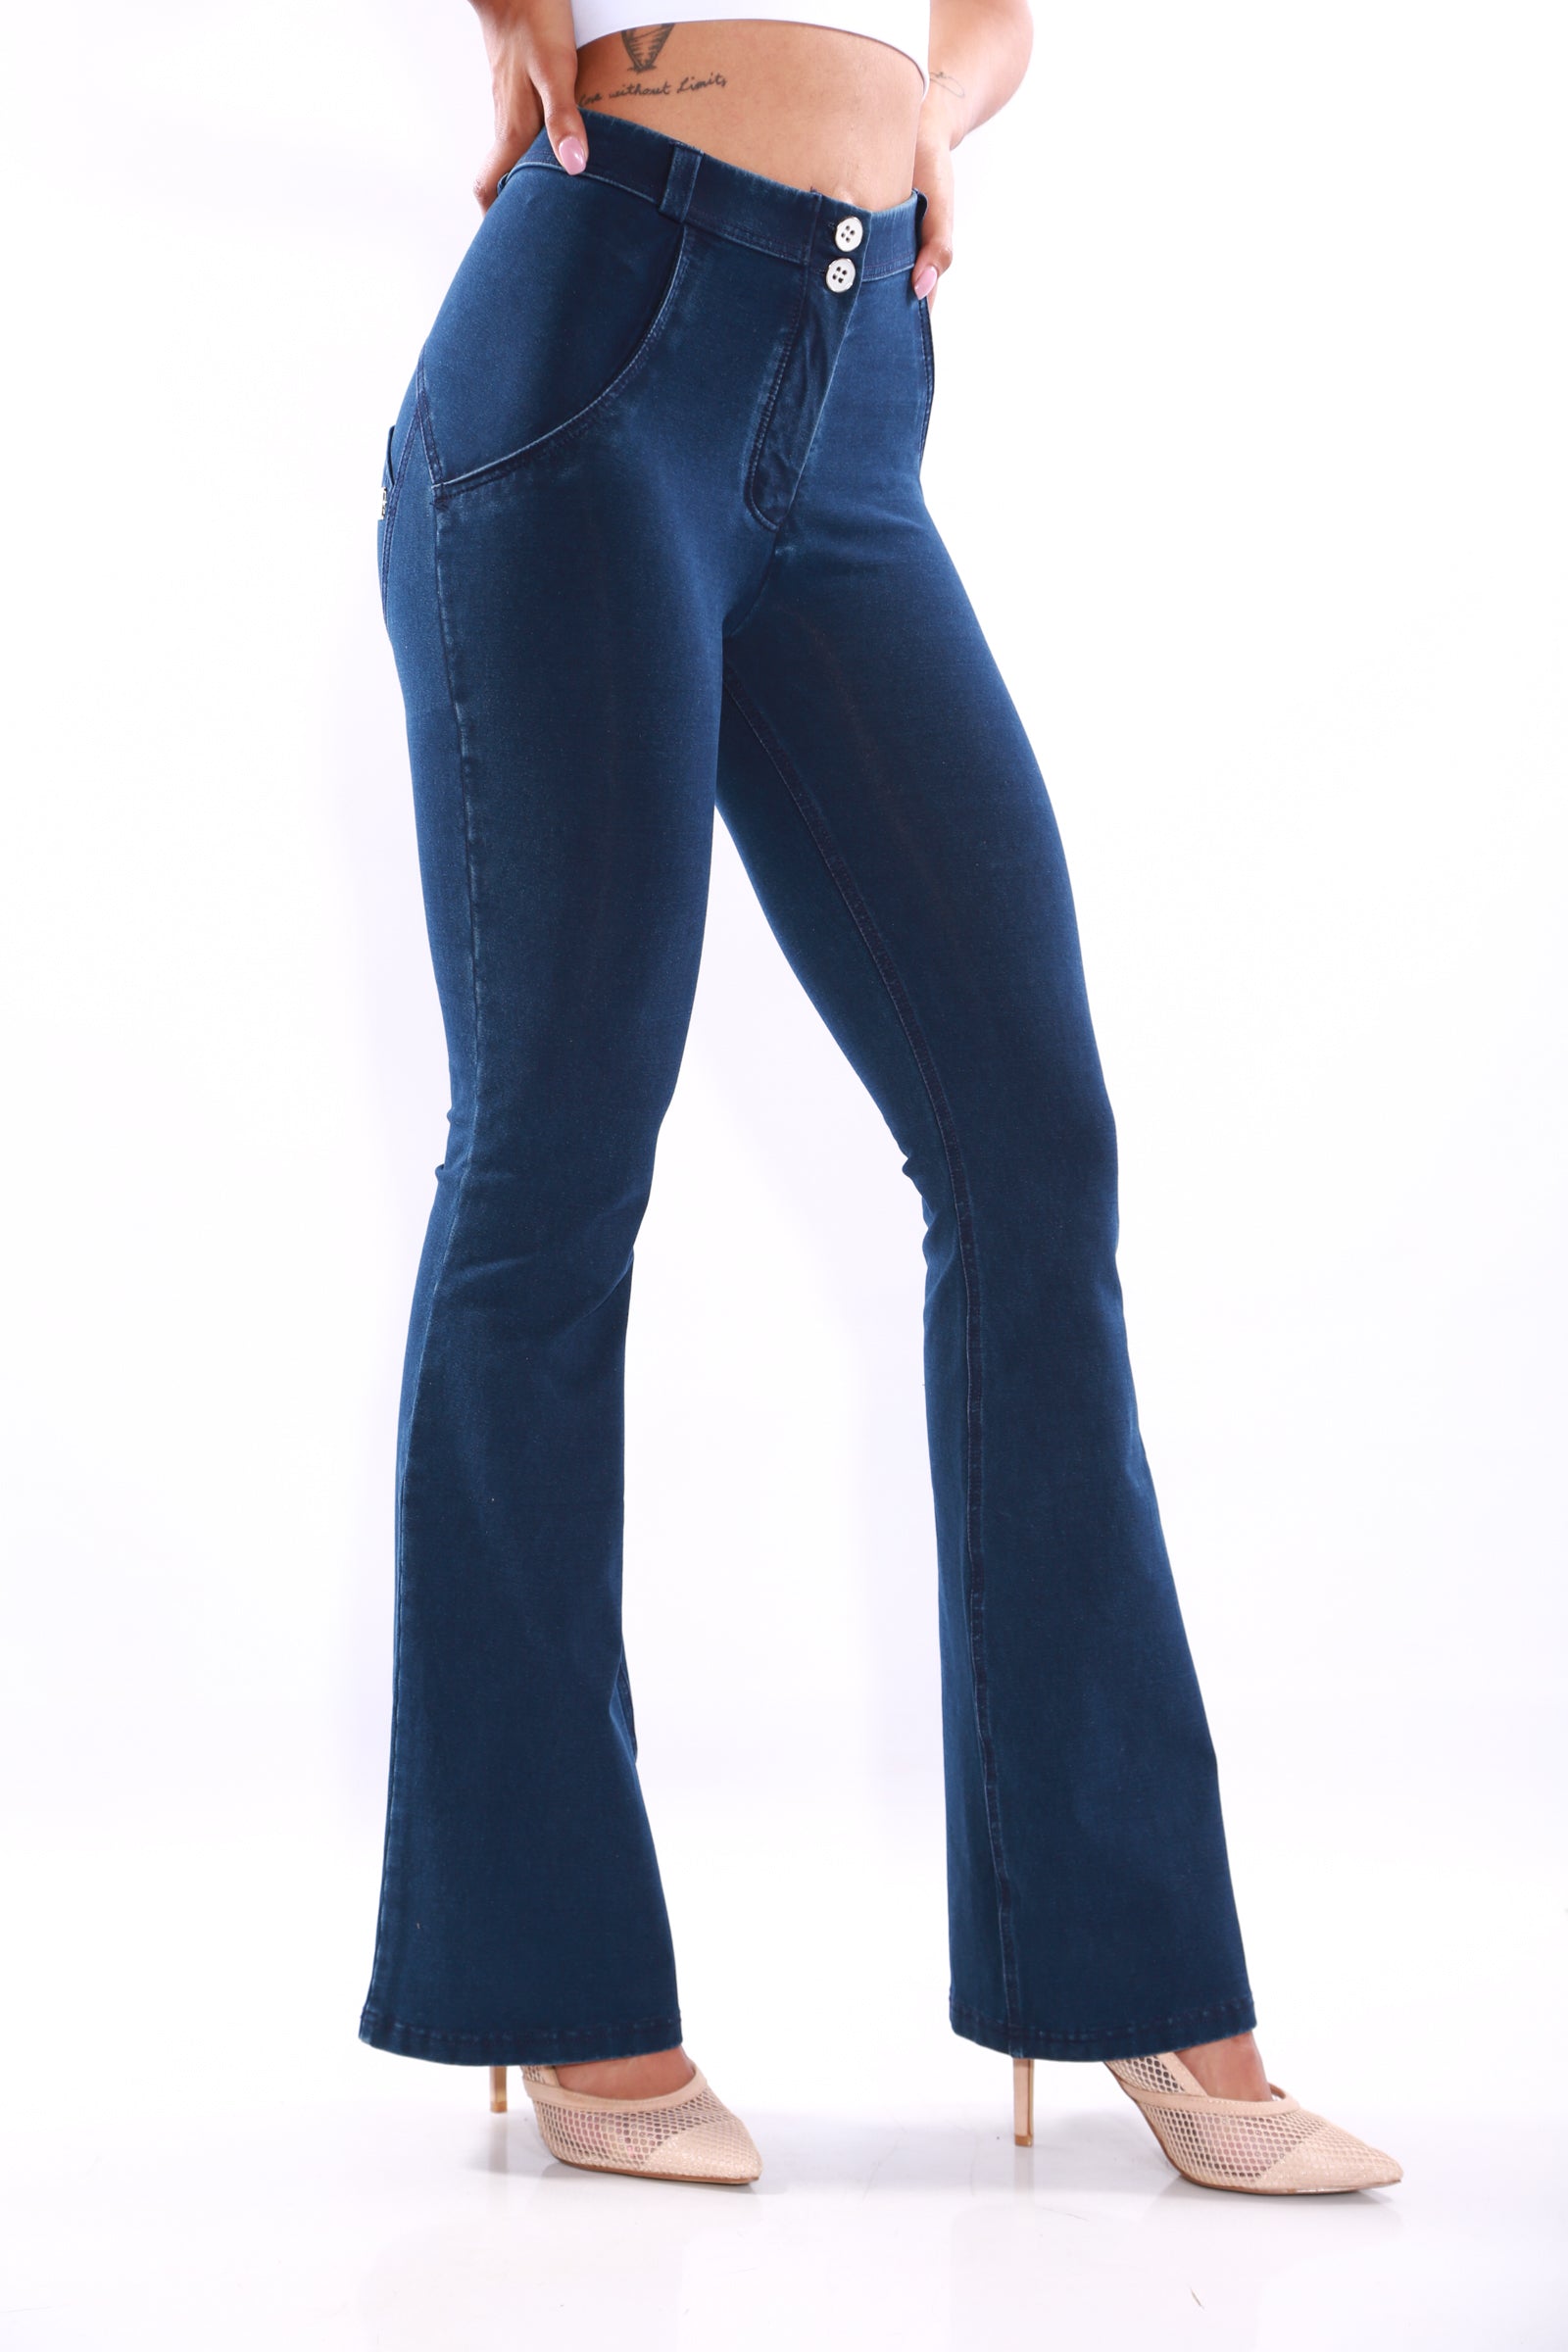 High waist Butt lifting Shaping jeans/Jeggings - Black Stone- Shop Now –  Wonderfit Australia